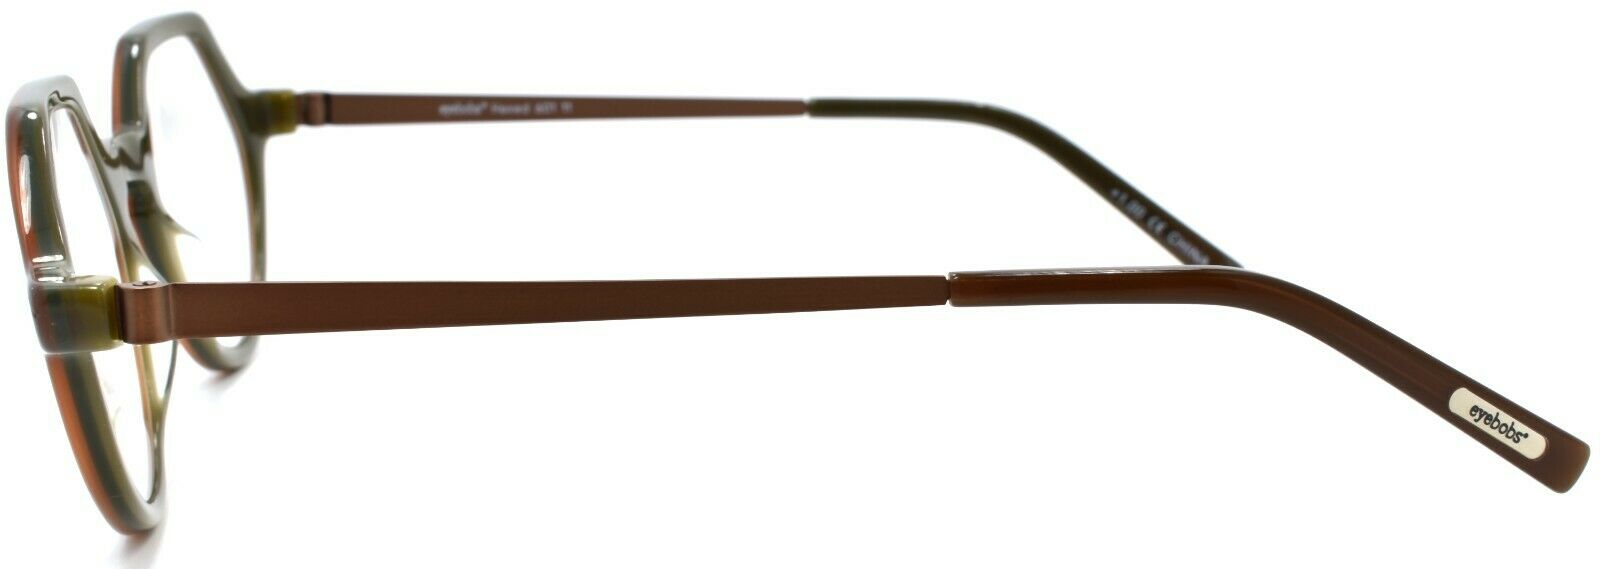 3-Eyebobs Hexed 601 11 Unisex Reading Glasses Green Brown +1.00-842754129244-IKSpecs